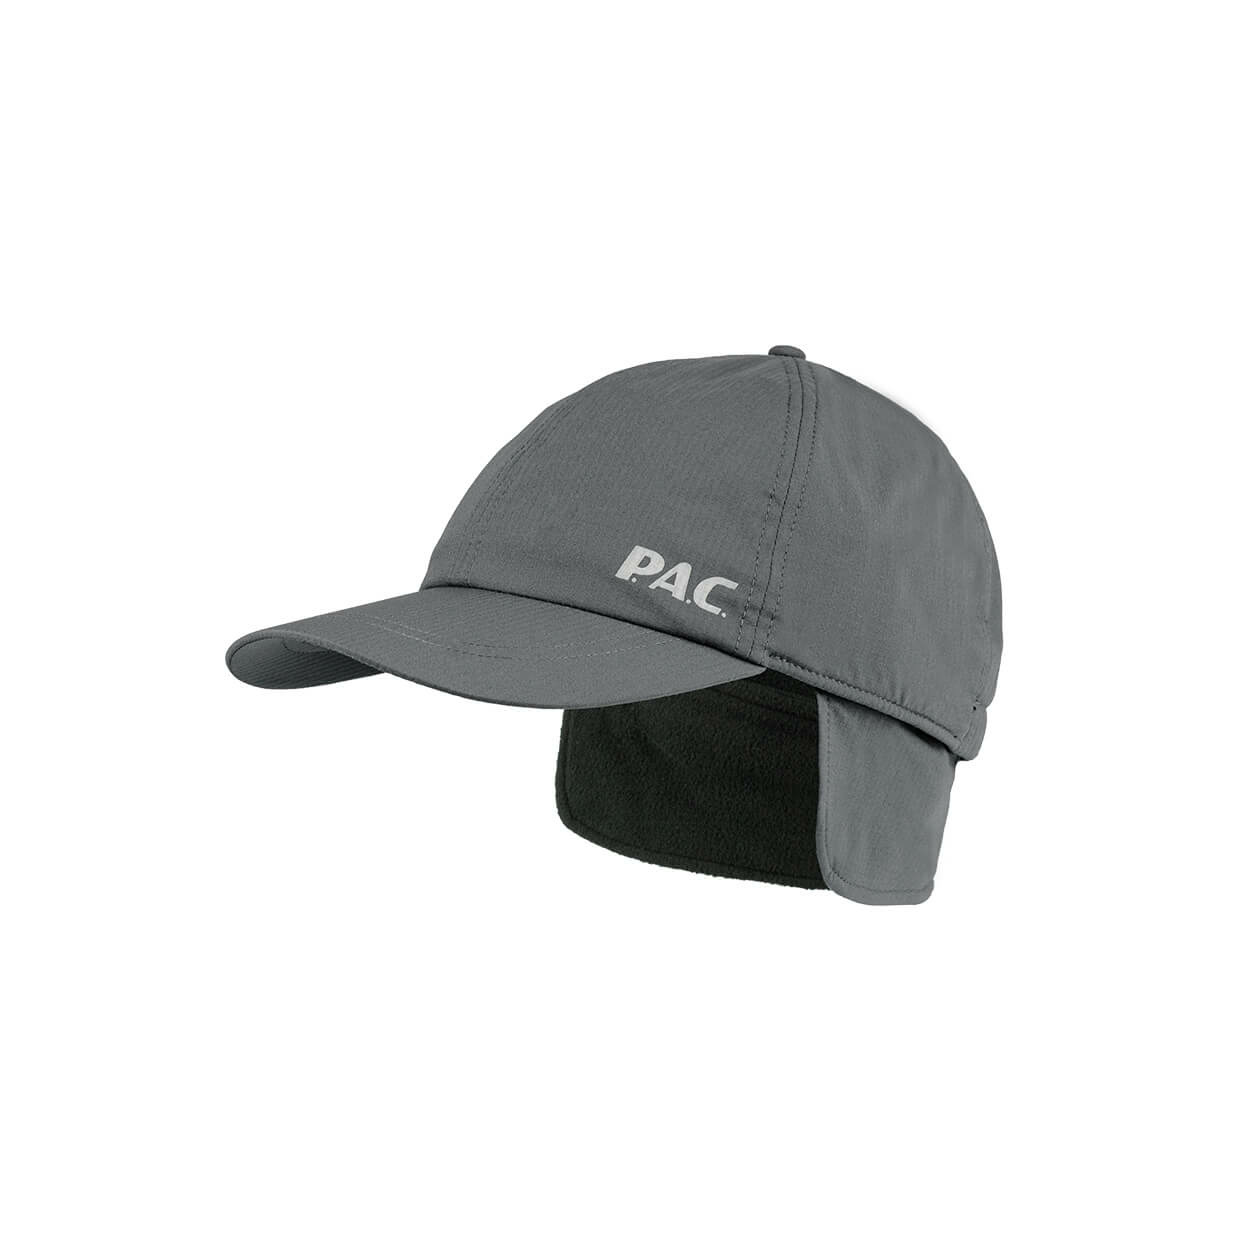 PAC Dhawal GORE-TEX Grey BUFF und - - Outdoor HEADWEAR-SHOP kaufen L/XL Ear PAC im | online Cap Flap